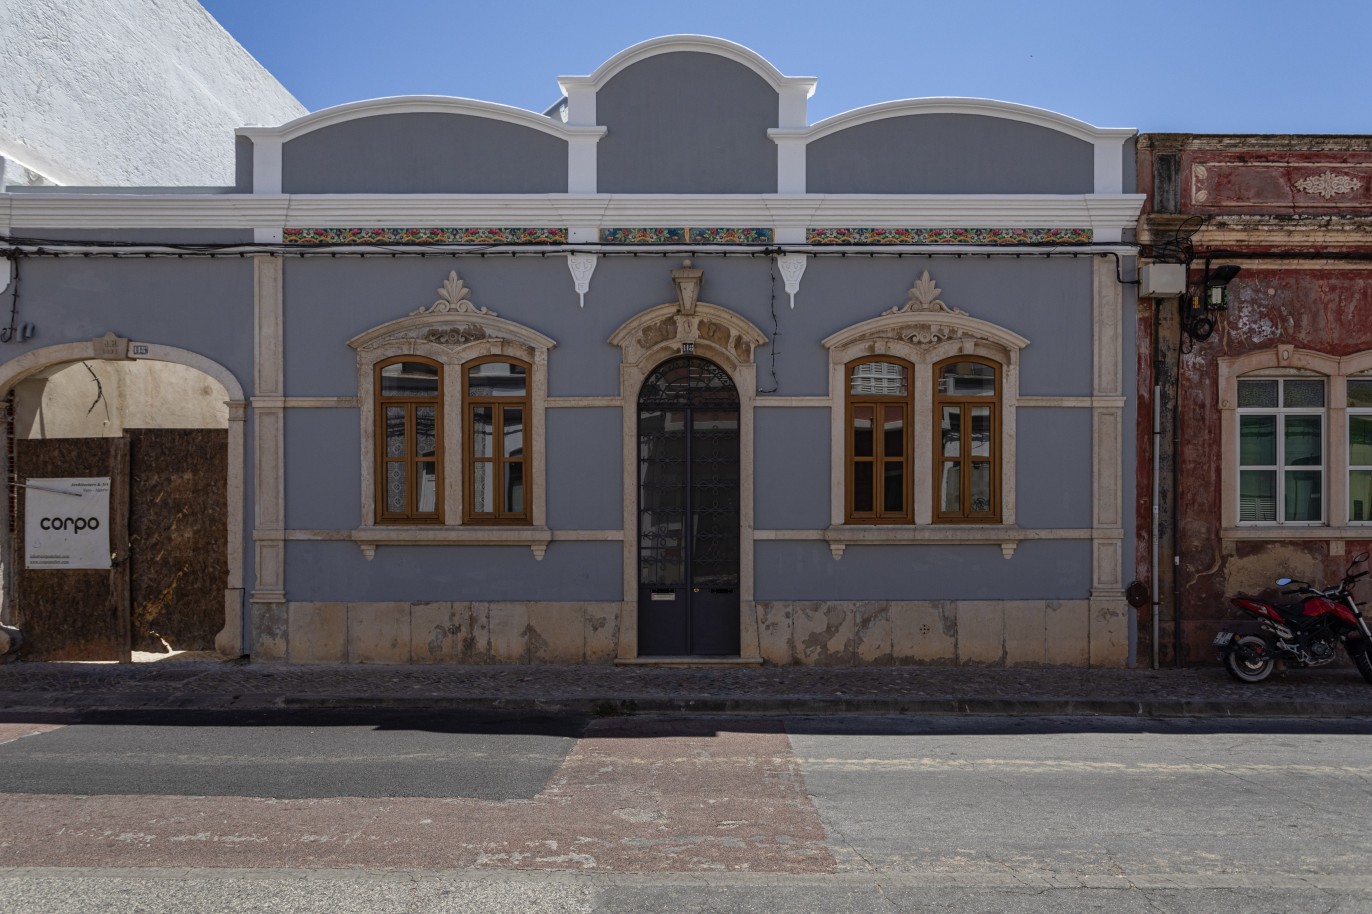 Propriedade renovada de 3 moradias, para venda no centro de Faro, Algarve_232930